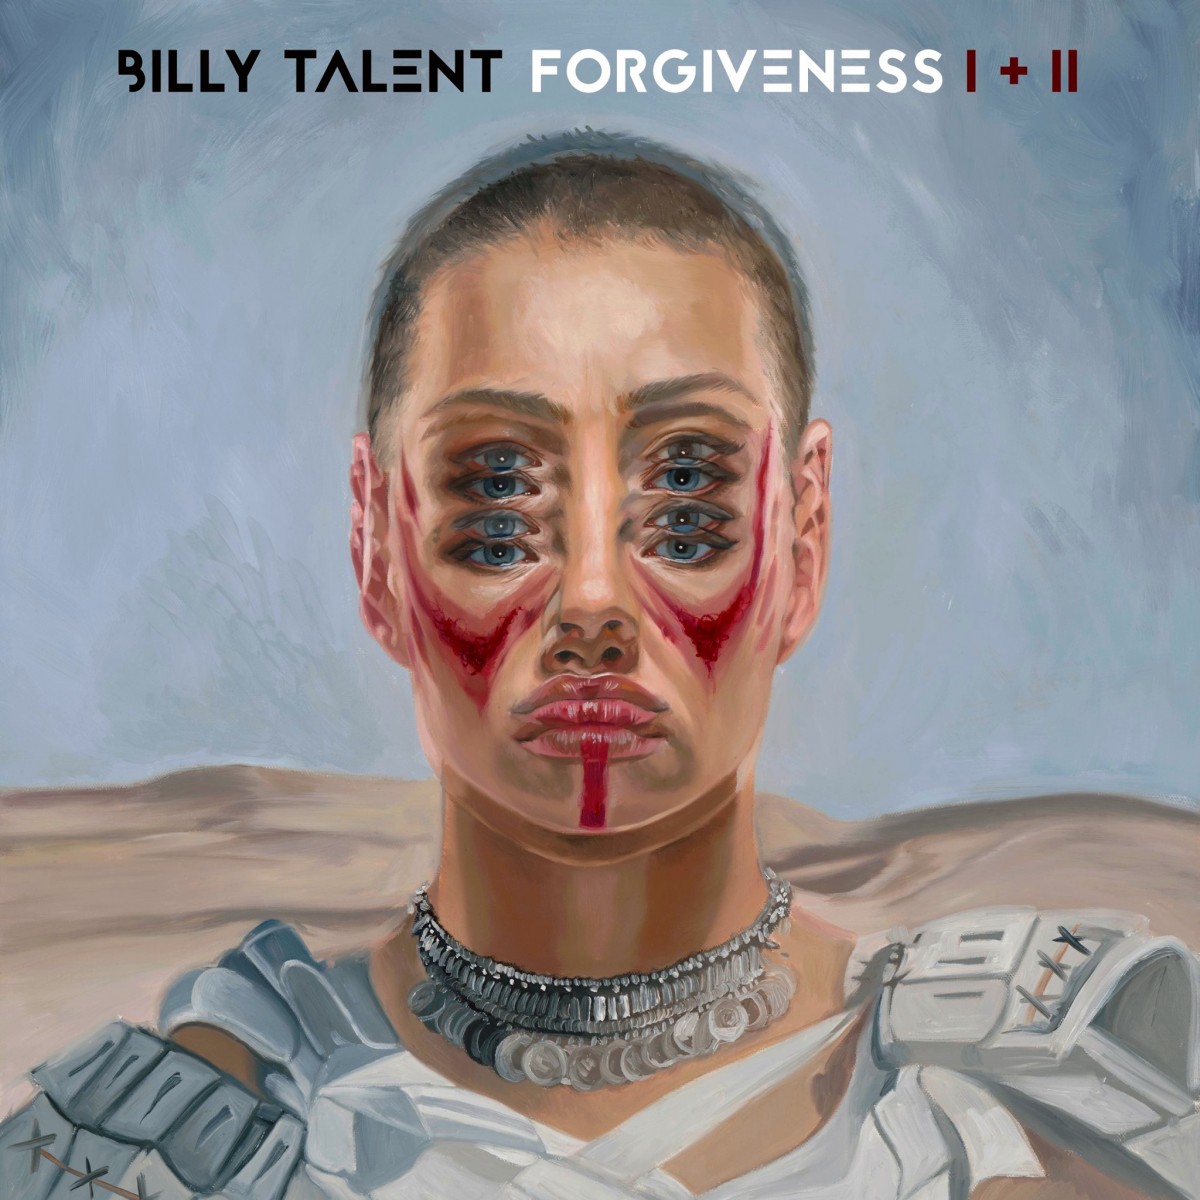 Billy Talent Release “Forgiveness I + II”